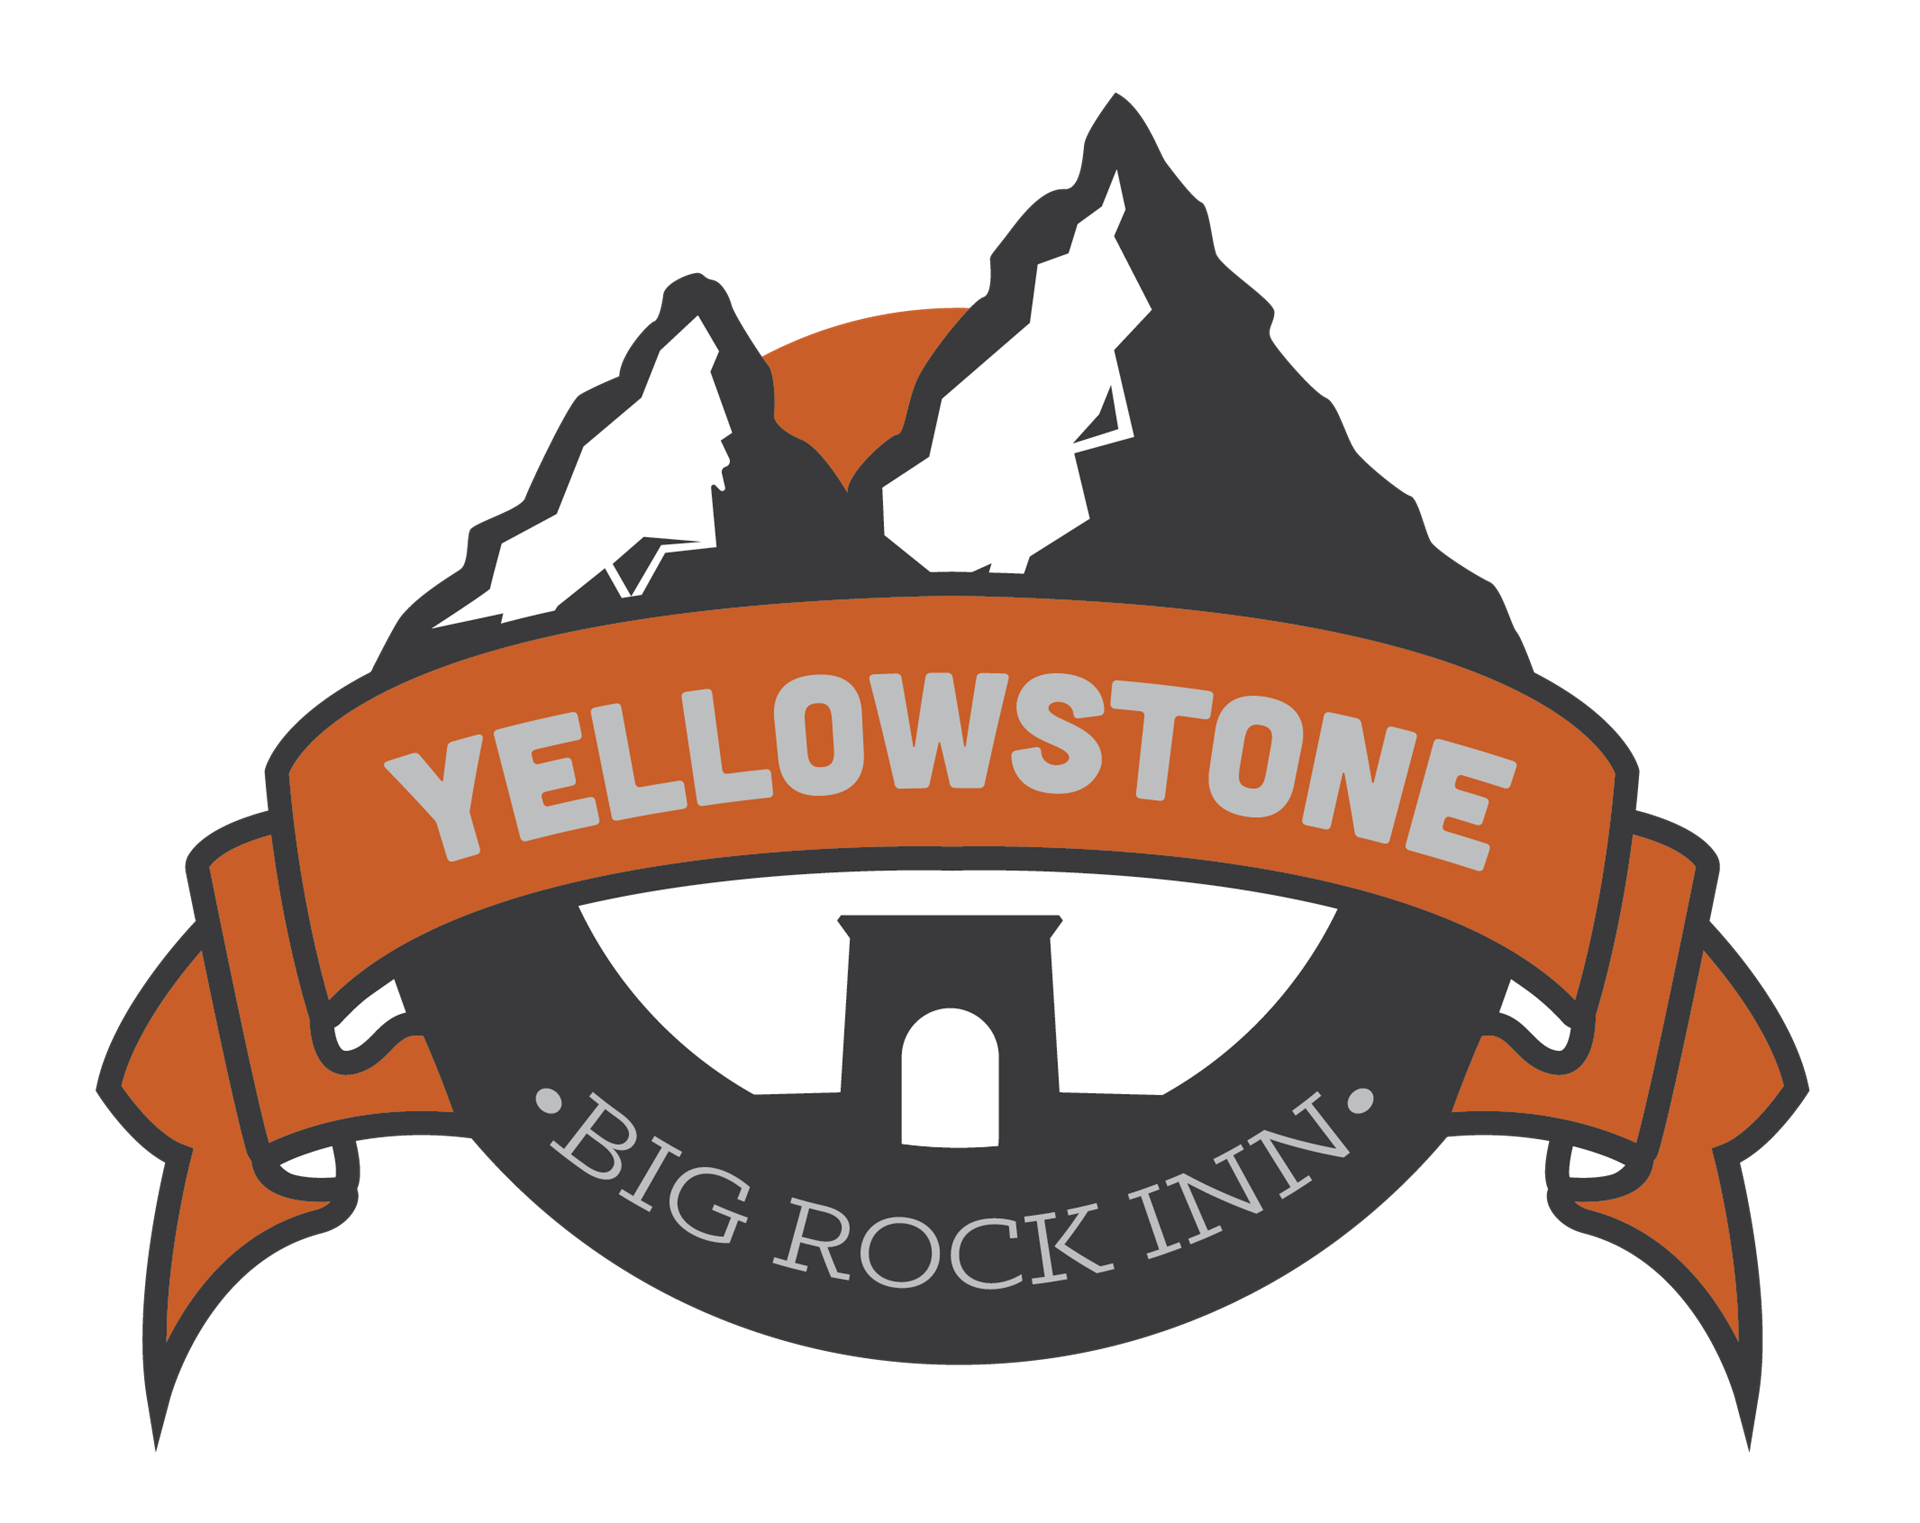 Contact - Gardiner, Montana Yellowstone Big Rock Inn.